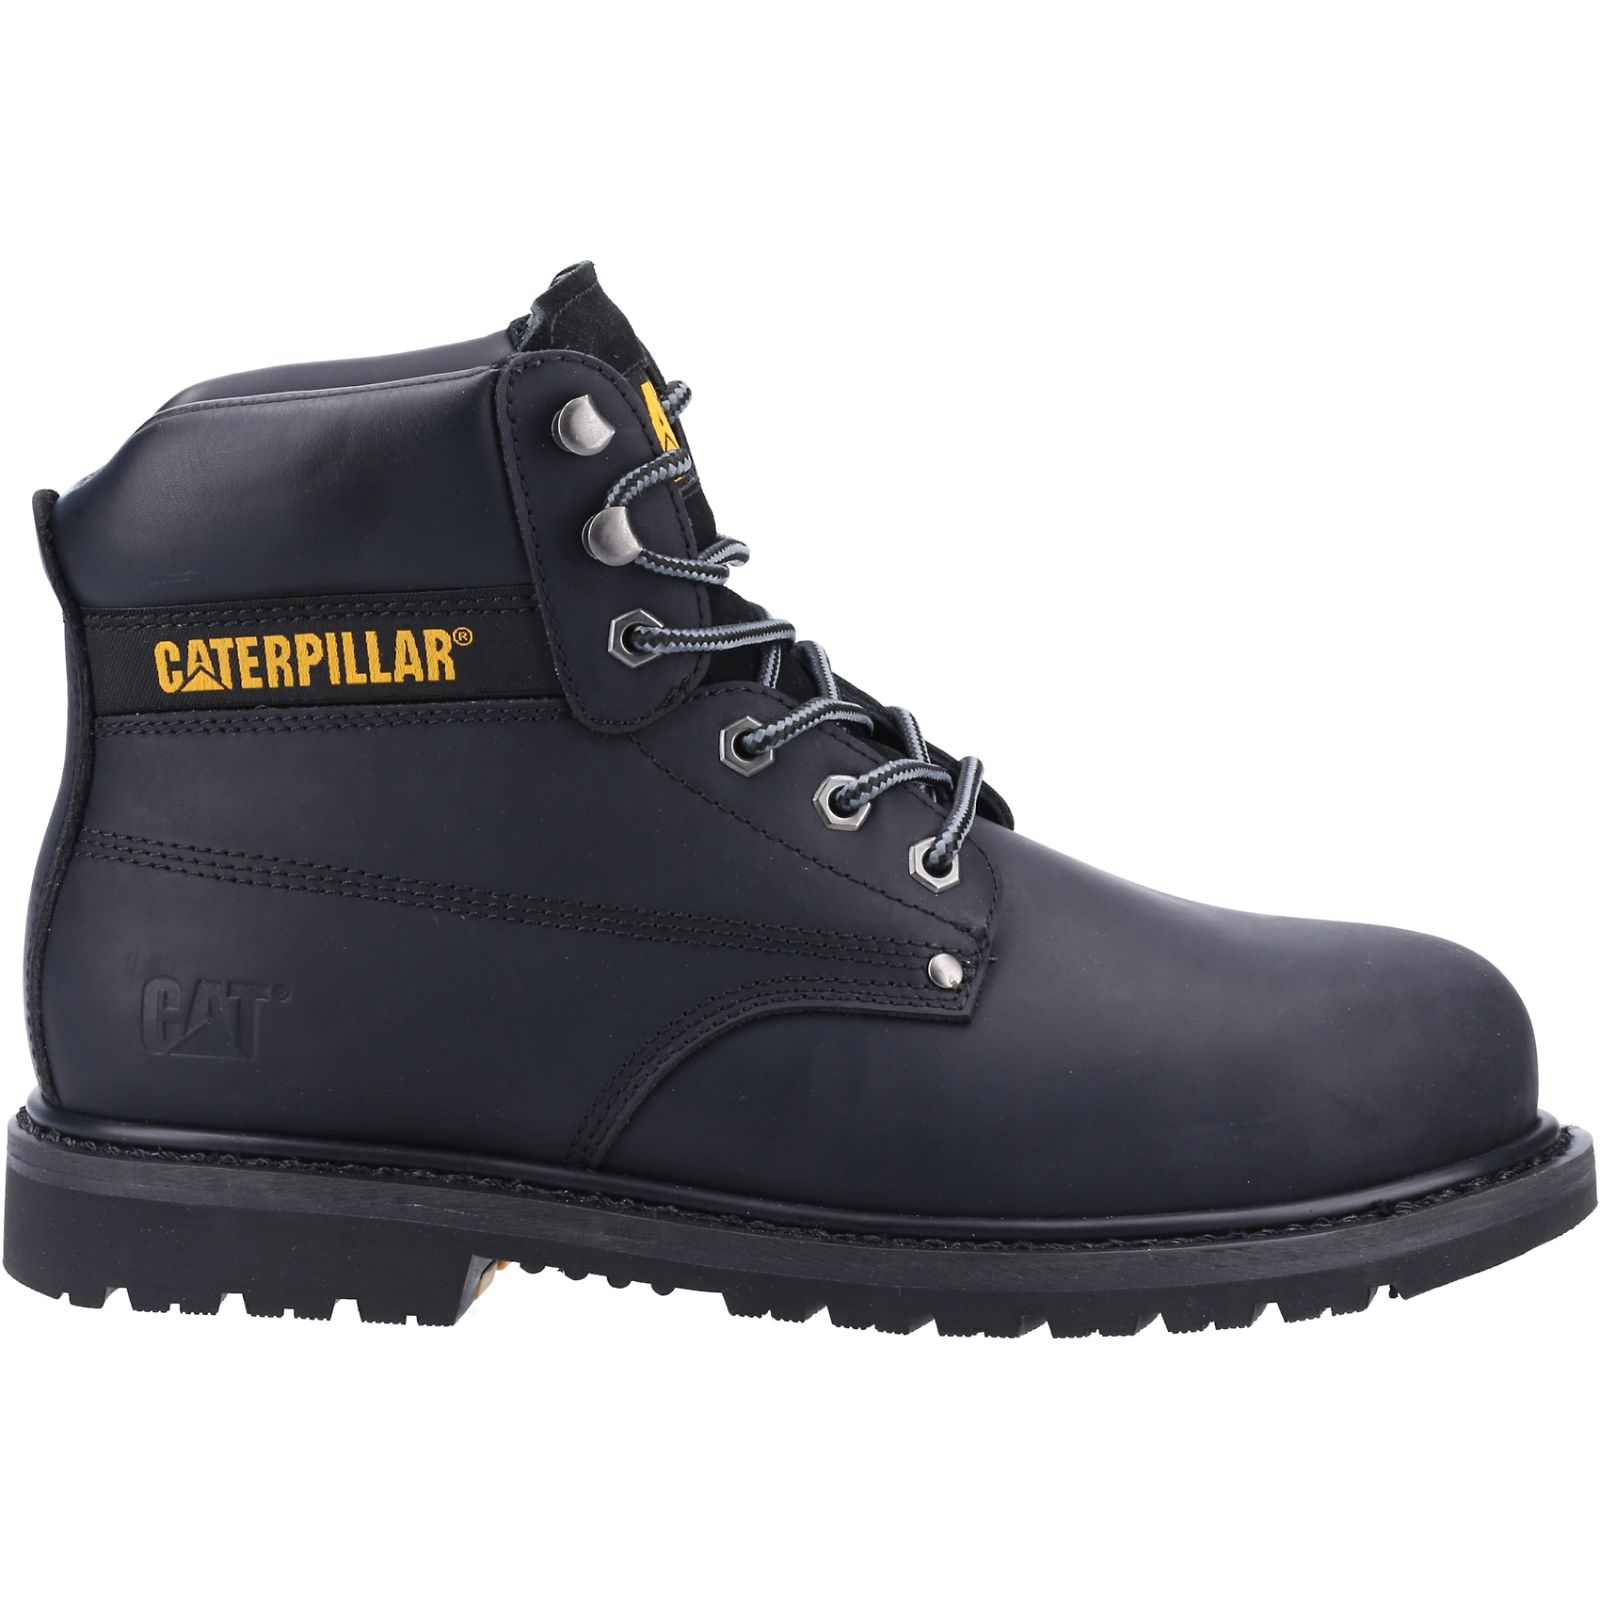 Caterpillar Work Boots Dubai - Caterpillar Powerplant St Hro Sra Mens - Black JNWHEU862